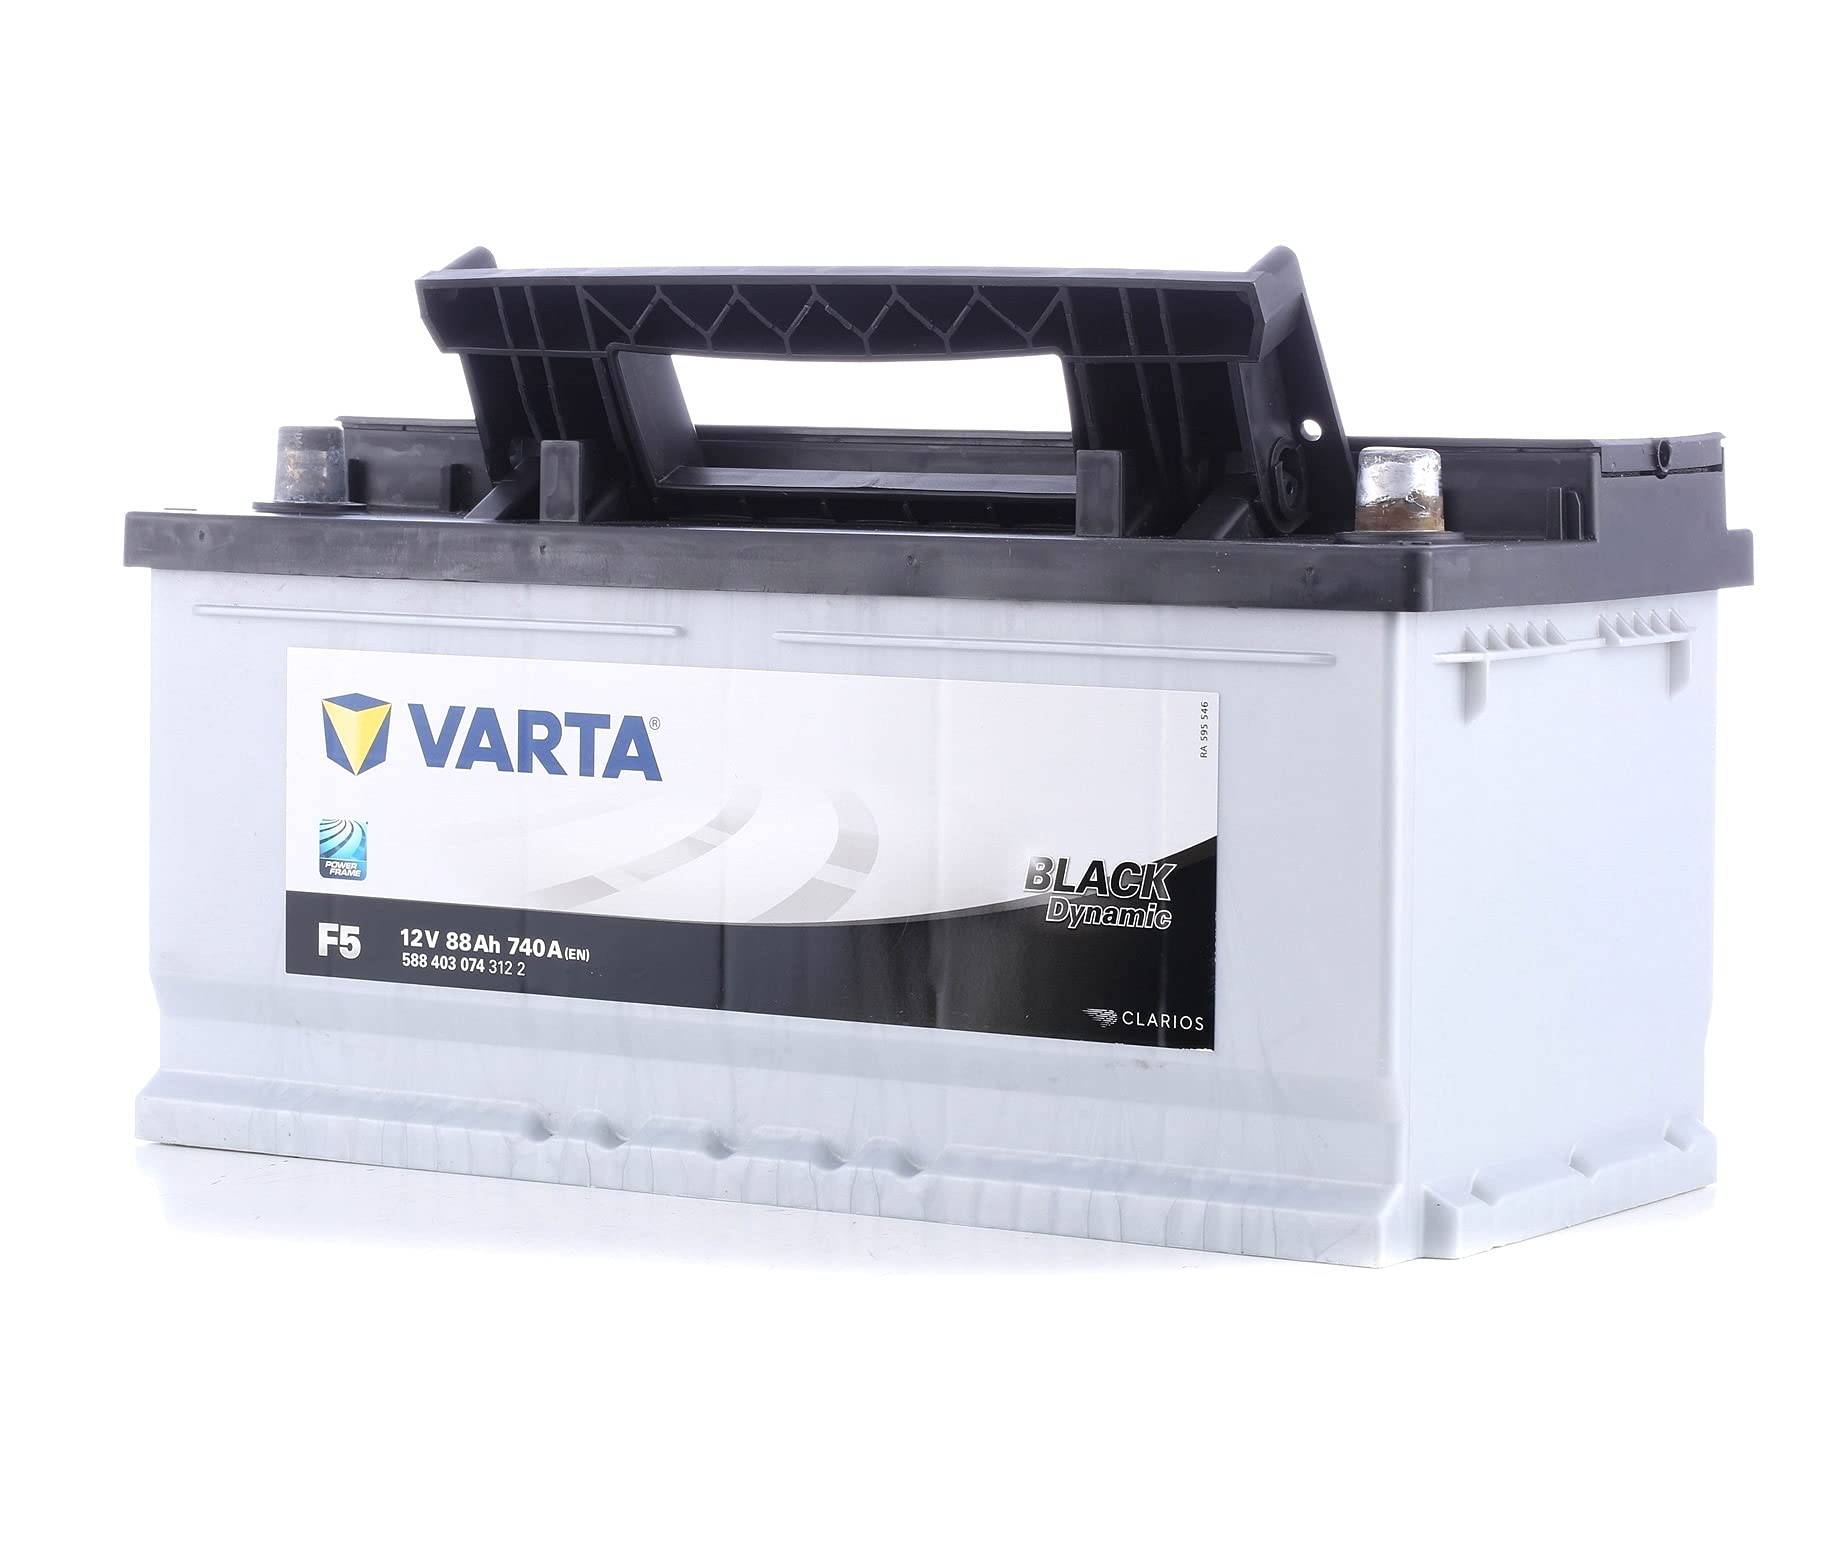 Varta 5884030743122 Autobatterien Black Dynamic F5 12 V 88 mAh 740 A von Varta